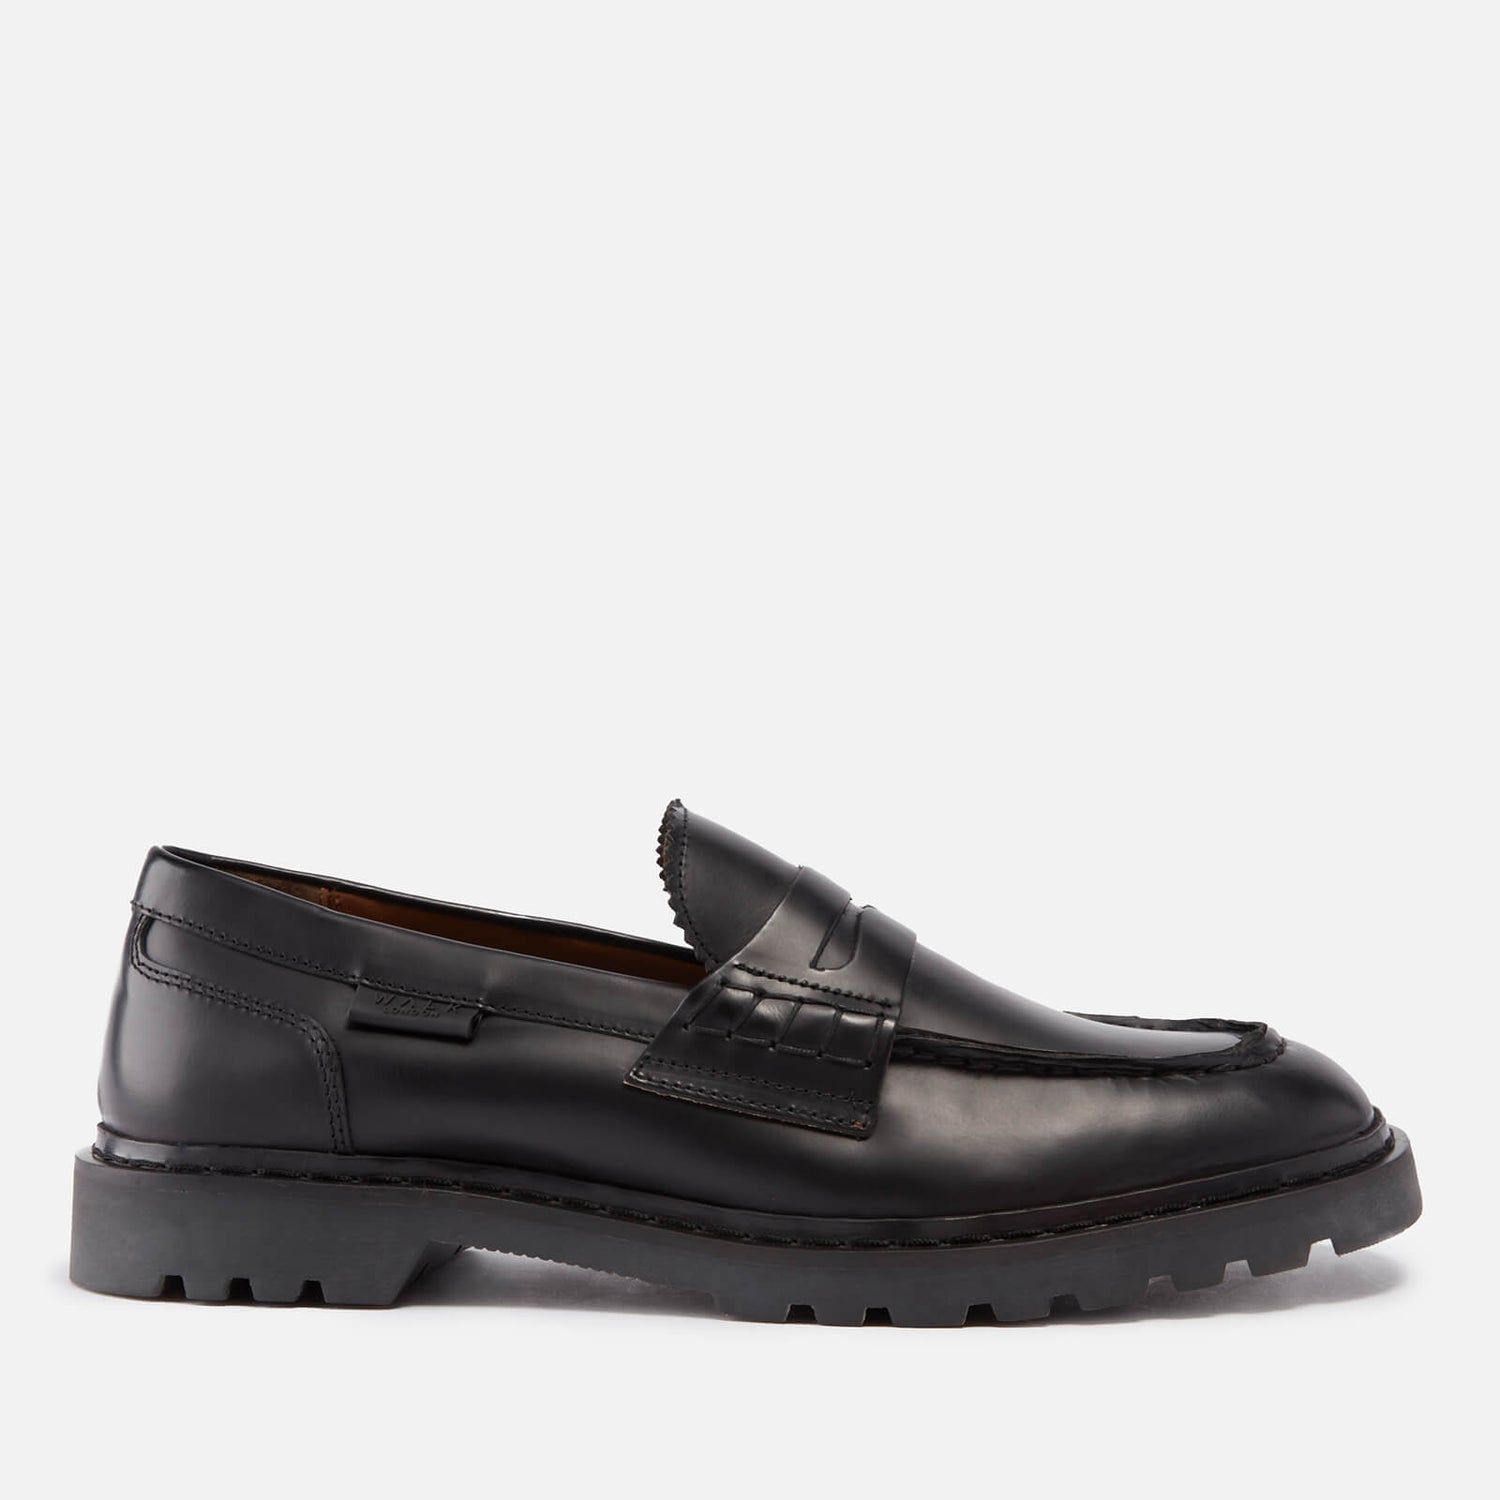 Walk London Milano Leather Saddle Loafers - 8